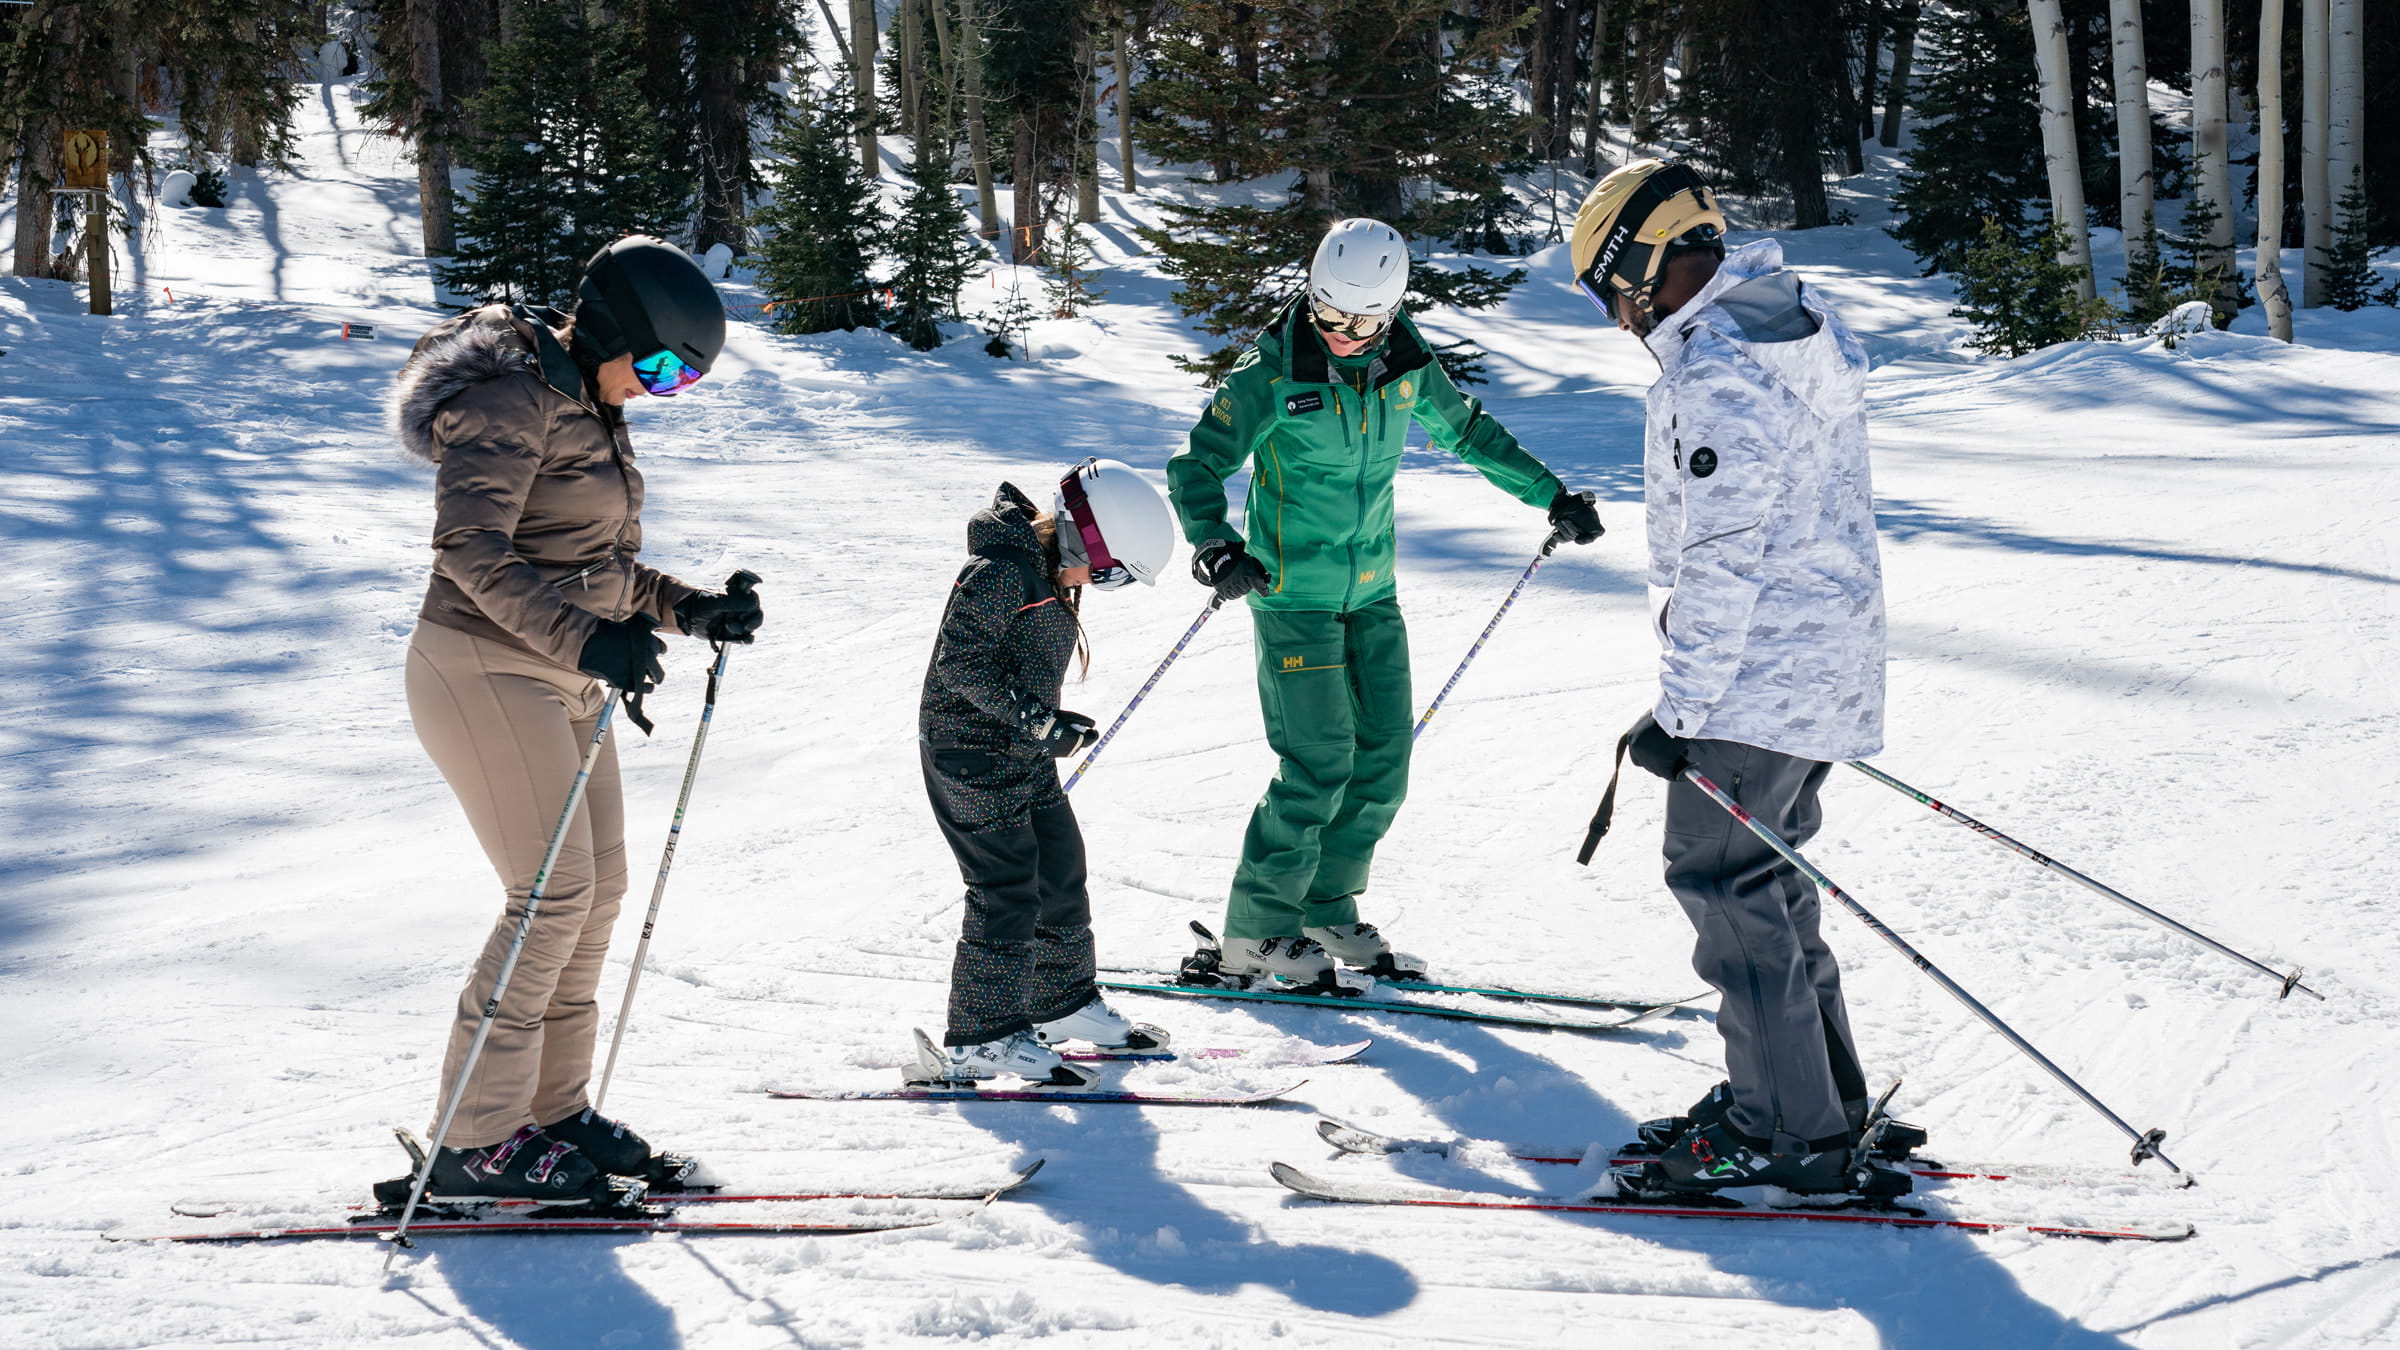 Group Ski Lesson at Deer Valley